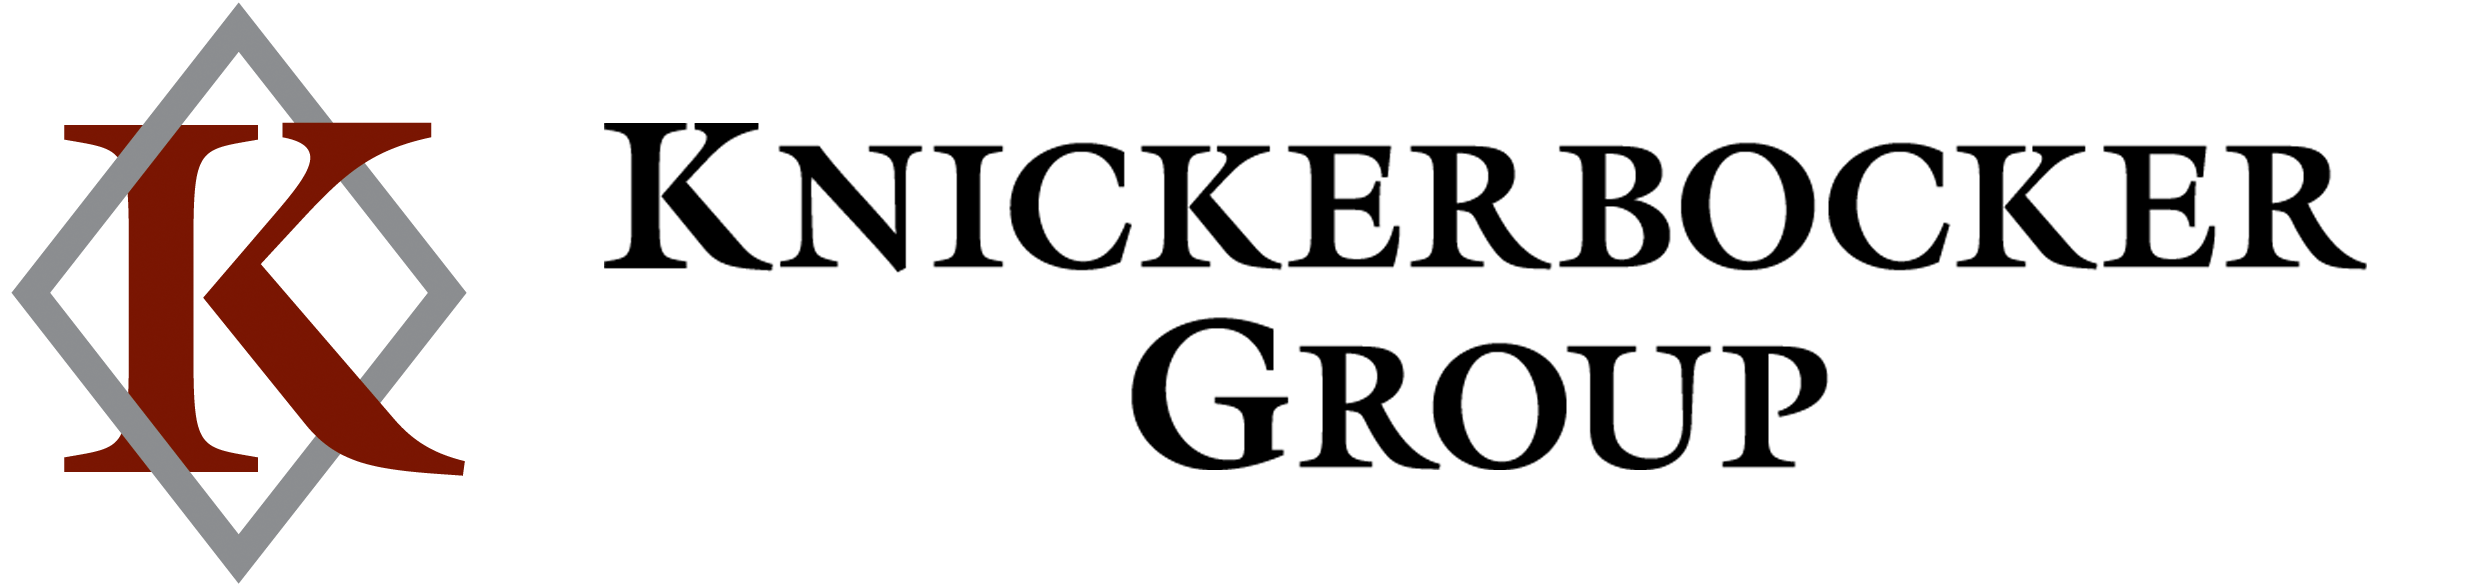 Knickerbocker Group logo